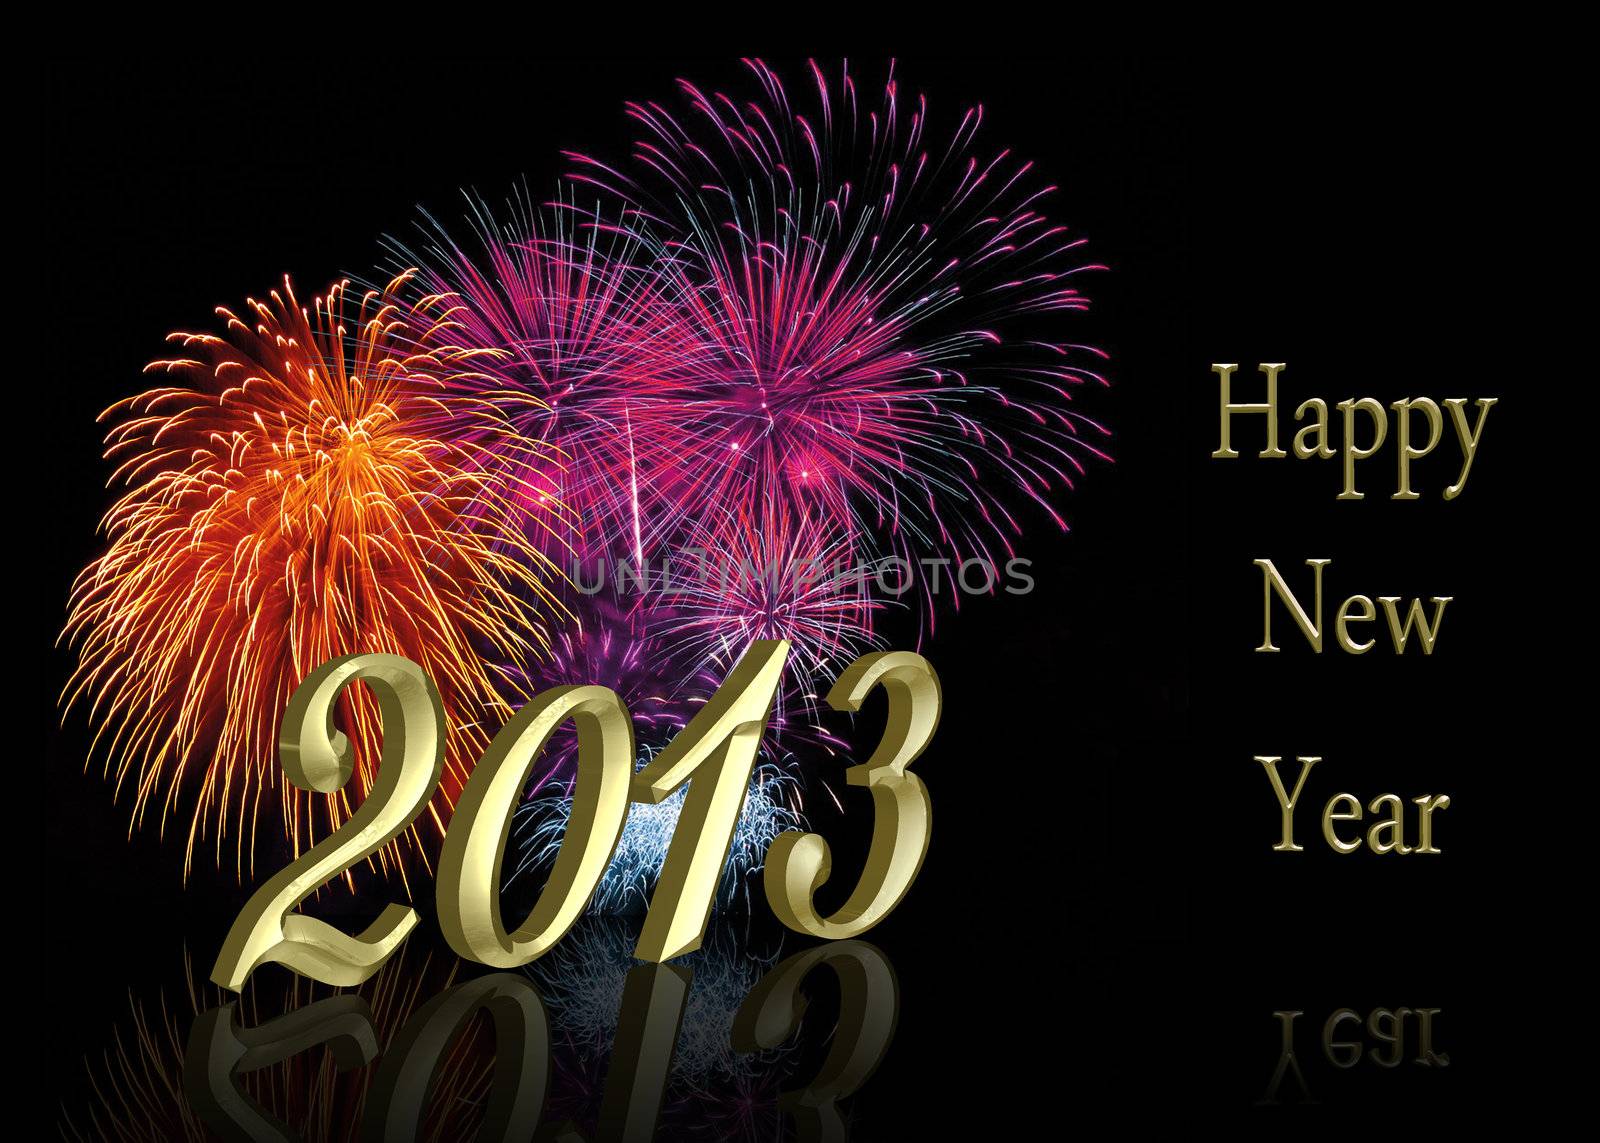 New Year 2013 Fireworks by SorayaShan